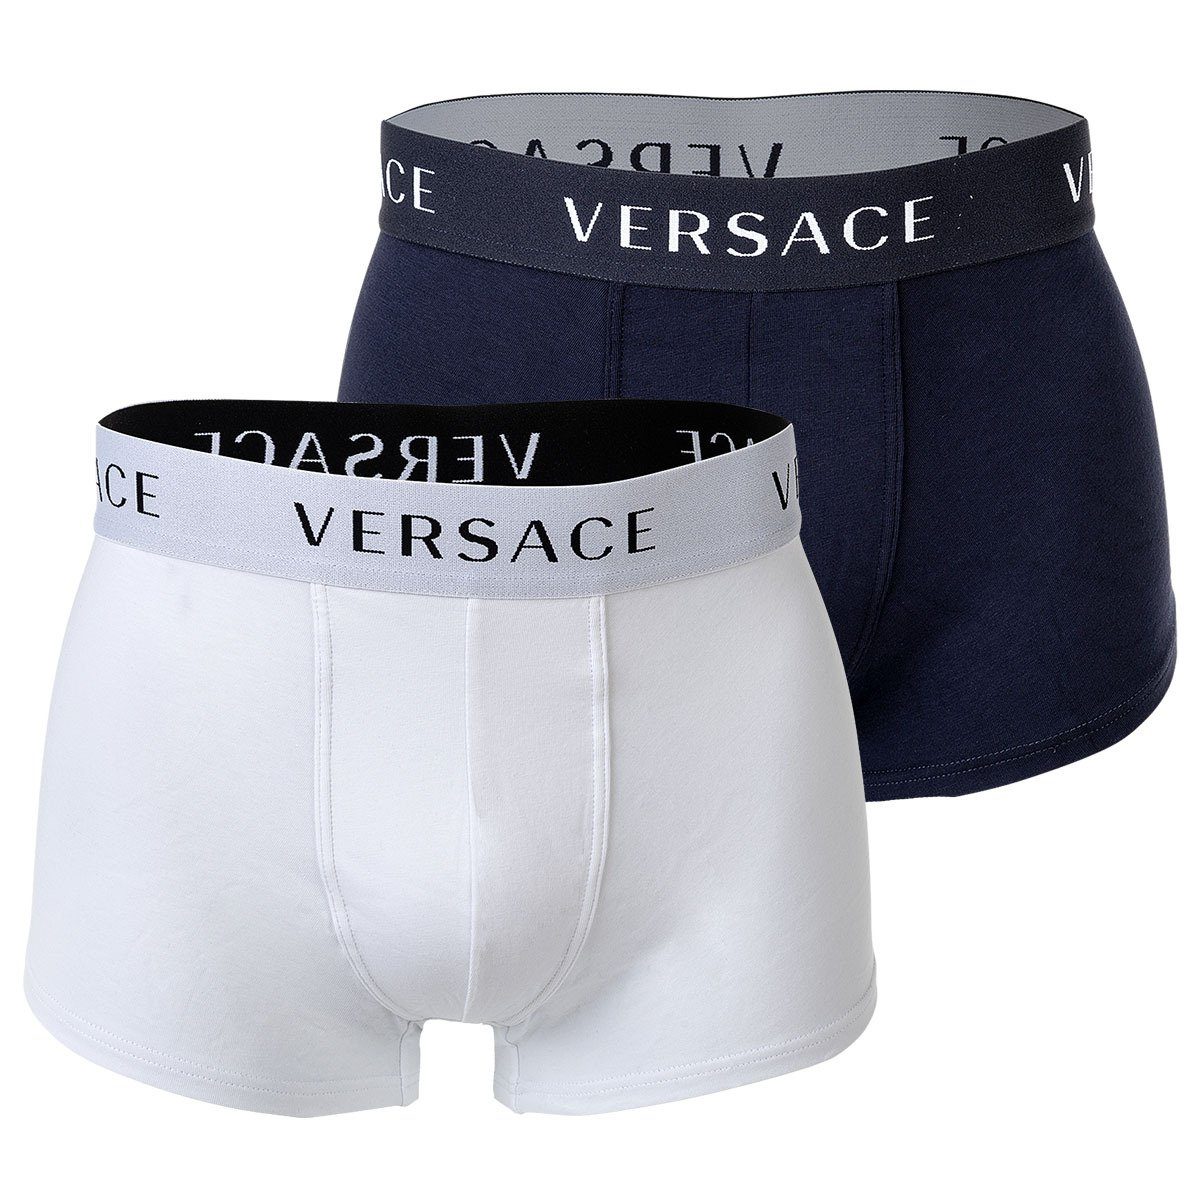 Versace Pack Shorts, Boxer - Weiß/Blau 2er Boxer Herren Trunk